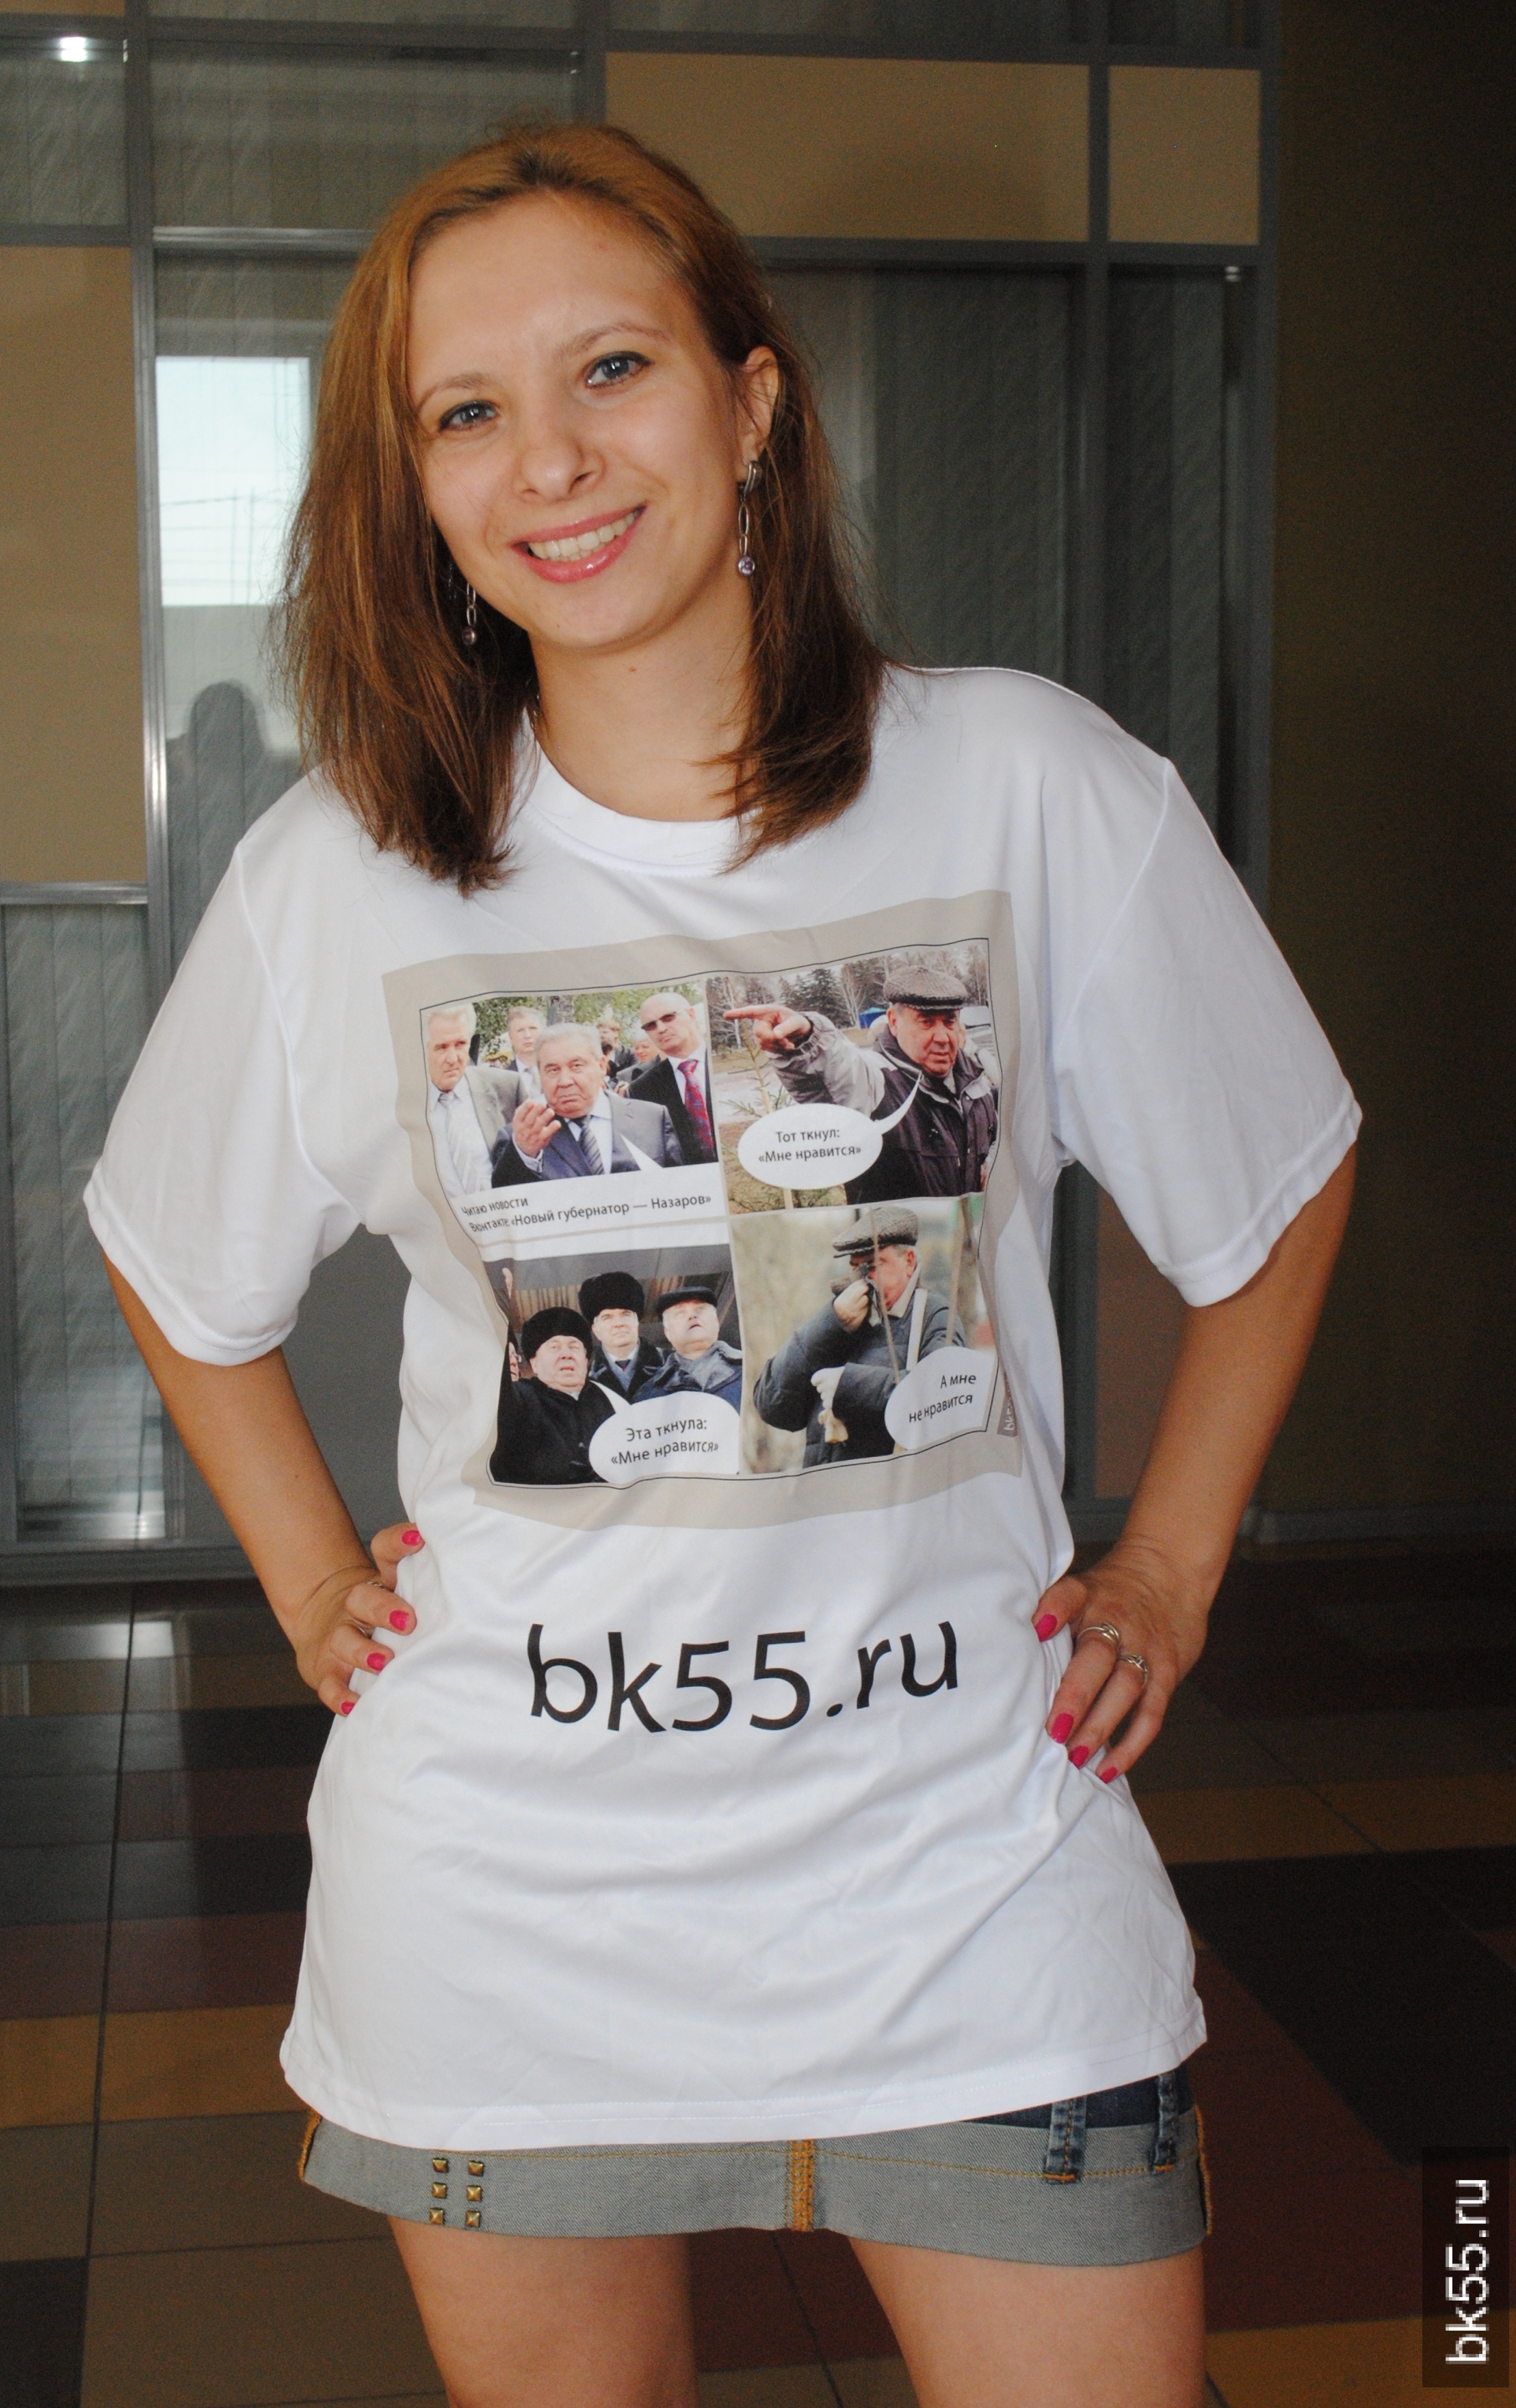 В конкурсе БК55 победила продавец из секс-шопа | Последние Новости Омска и Омской области | БК55